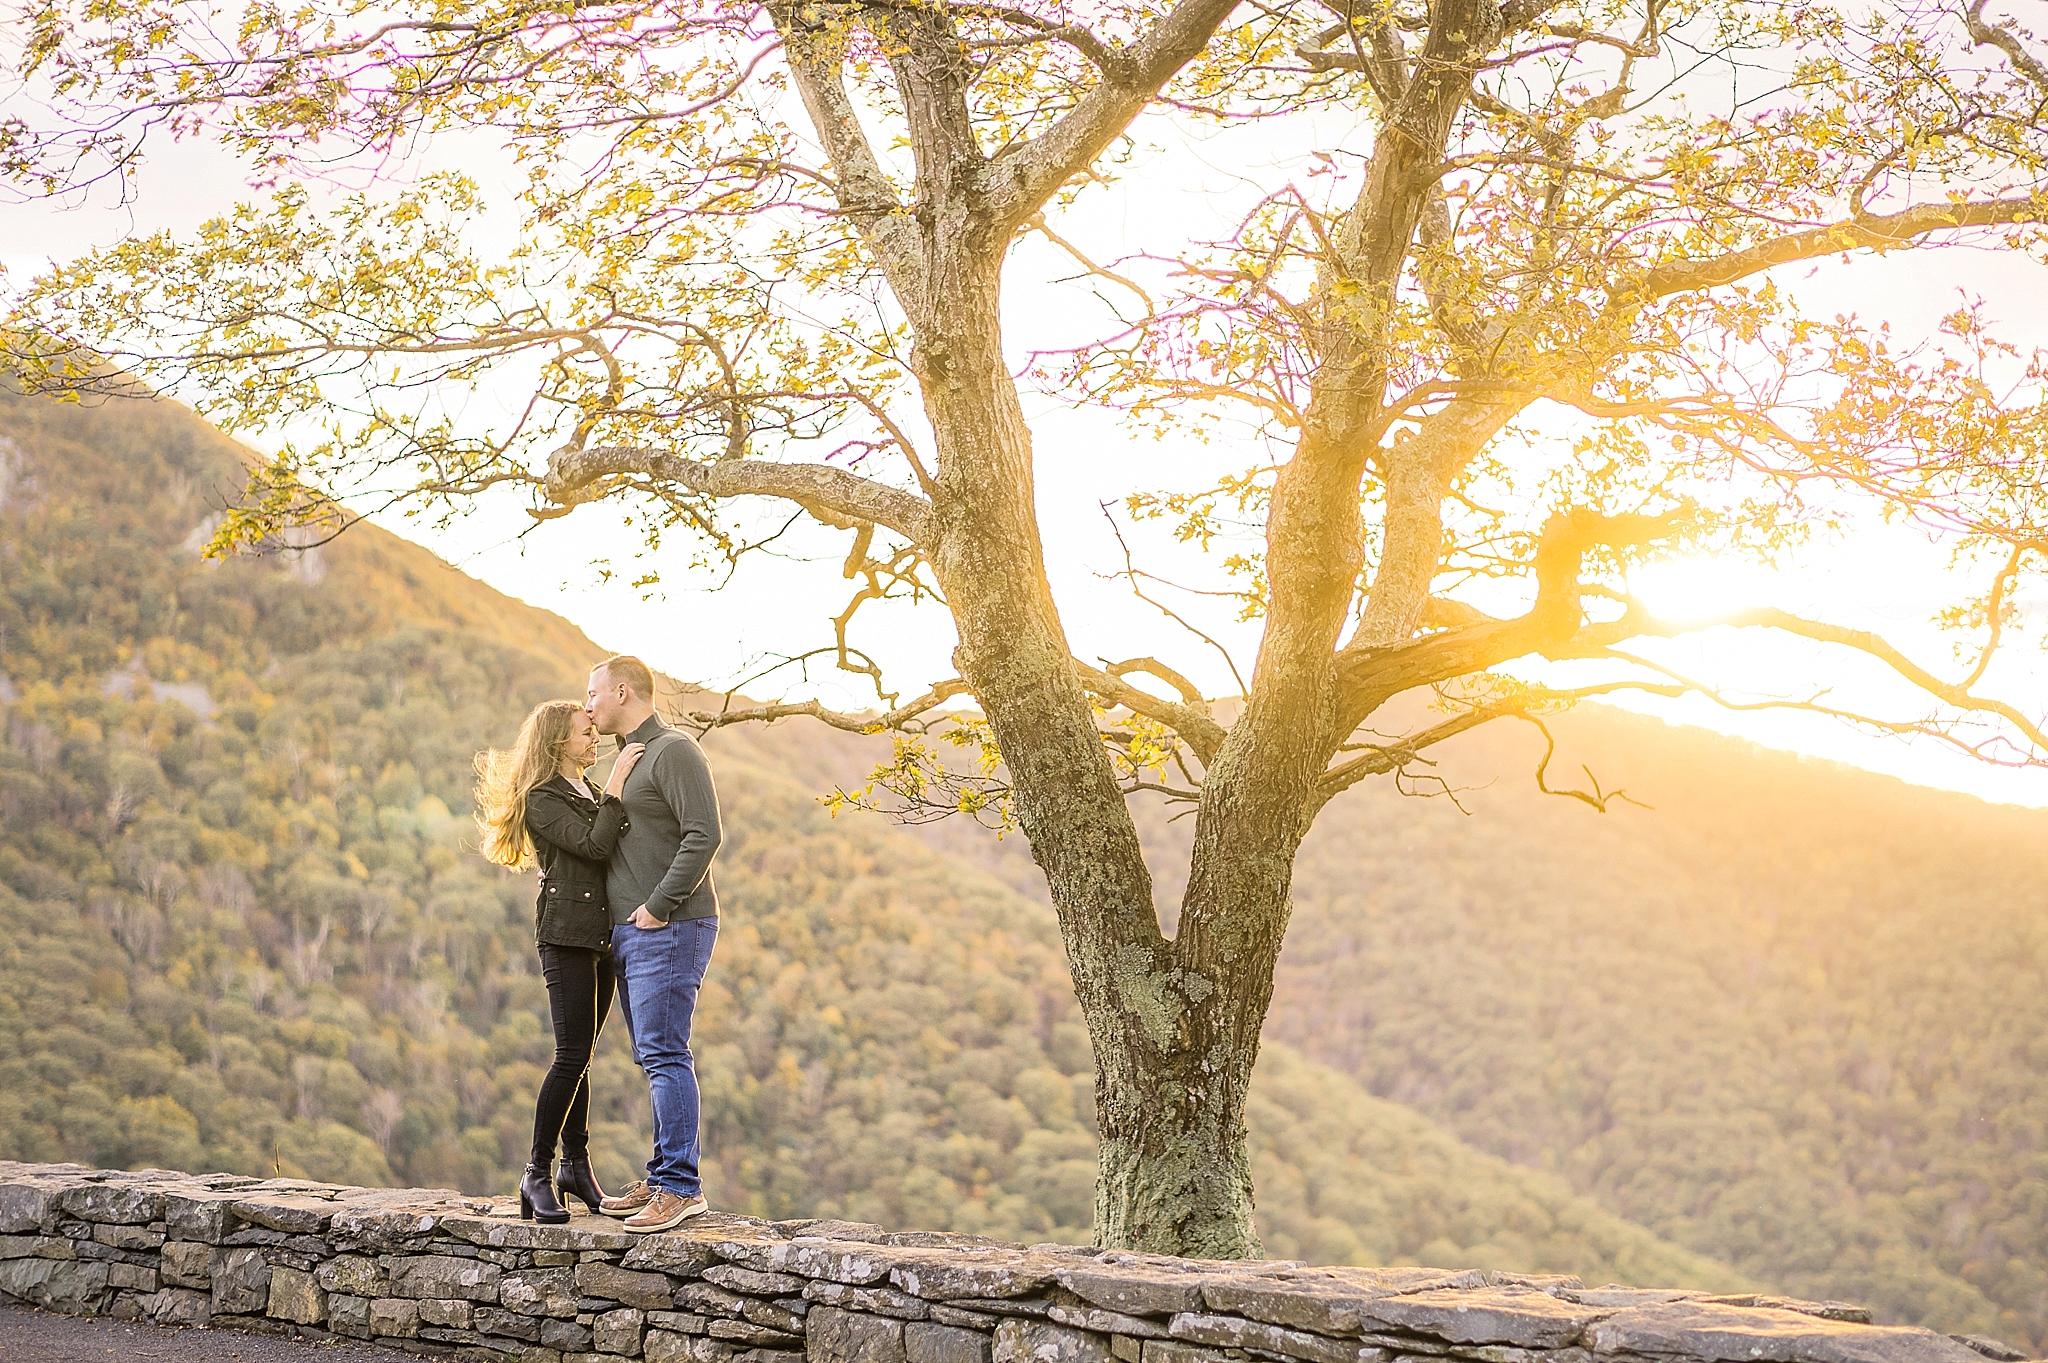 Evan & Britteny | Shenandoah Mountains, Virginia Engagement